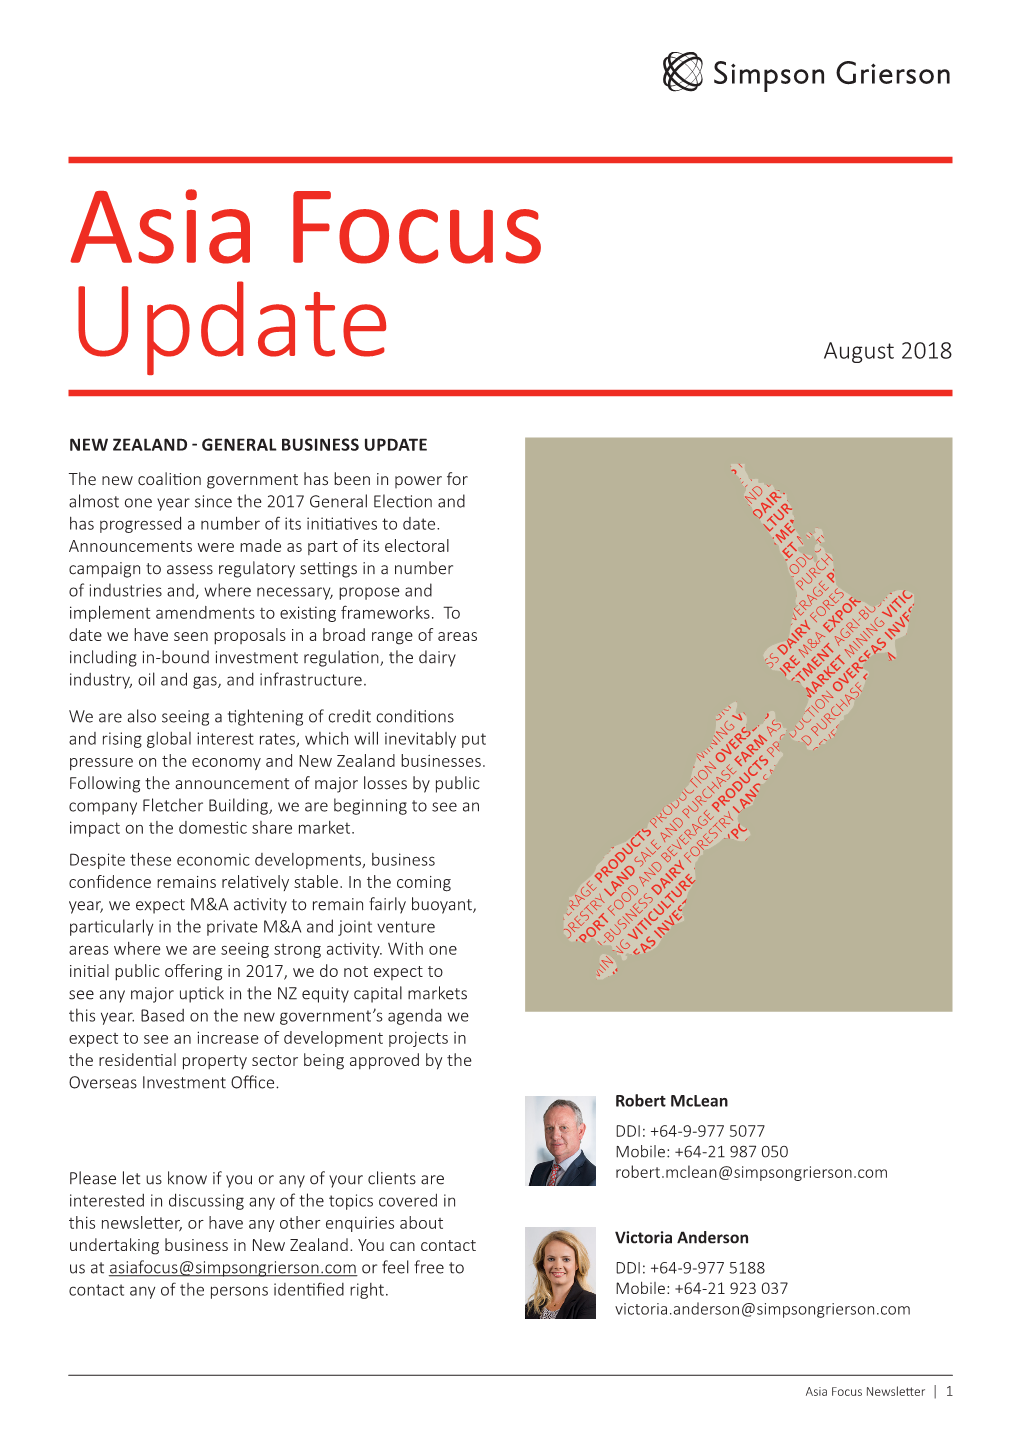 Asia Focus Newsletter August 2018